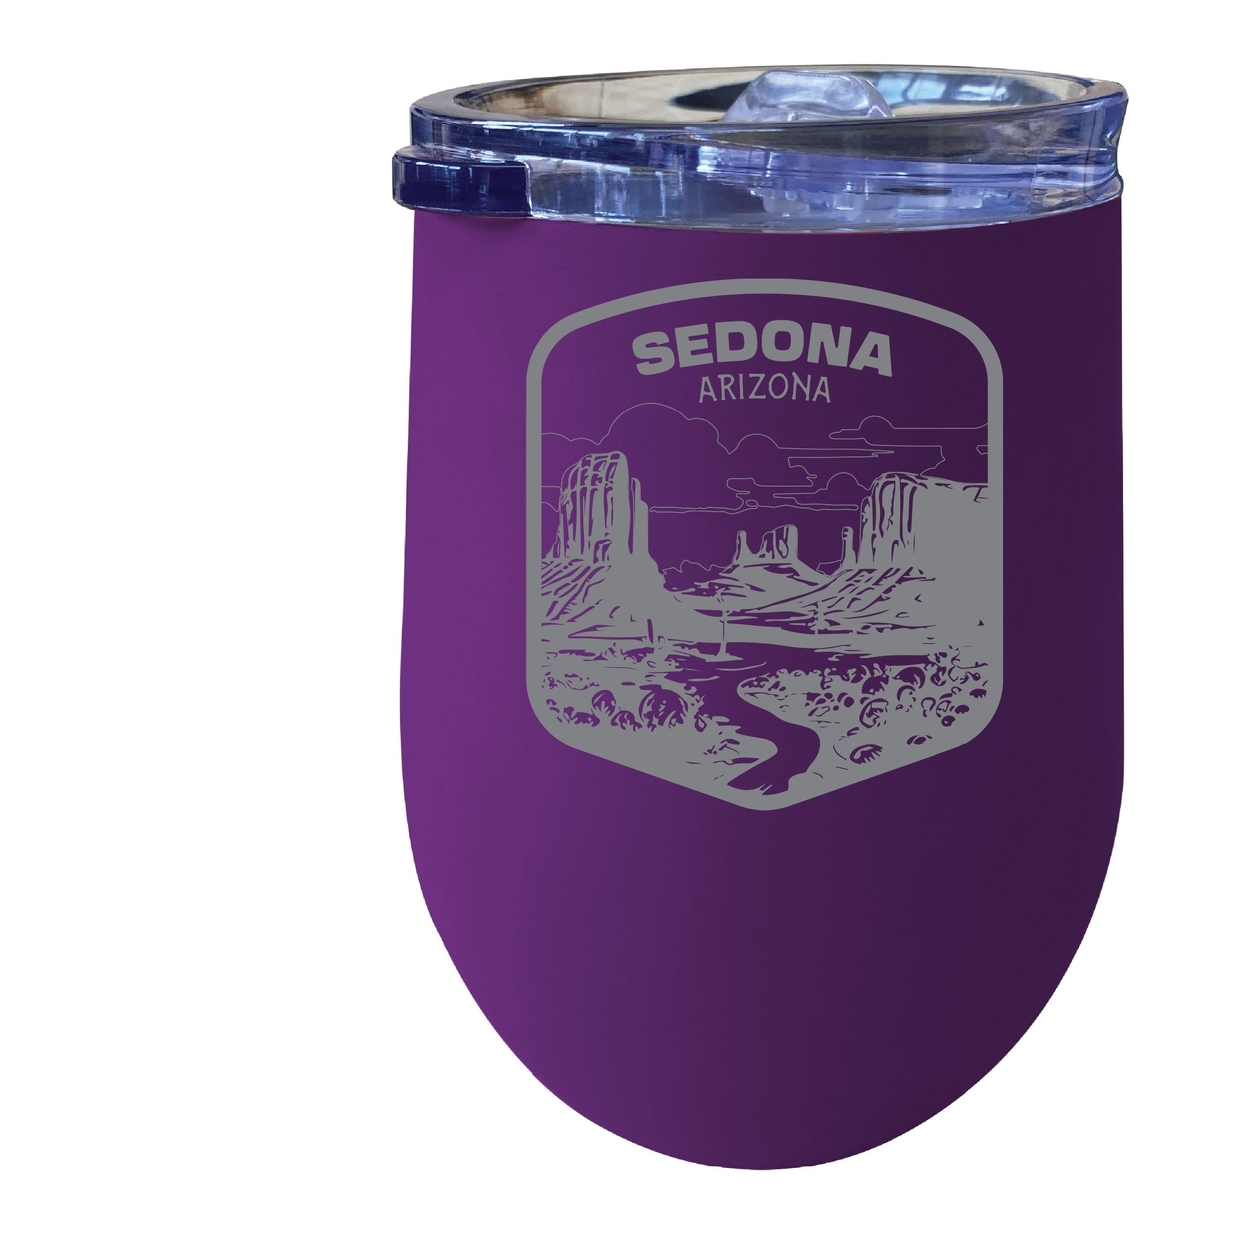 Sedona Arizona Souvenir 12 Oz Engraved Insulated Wine Stainless Steel Tumbler - Purple,,Single Unit